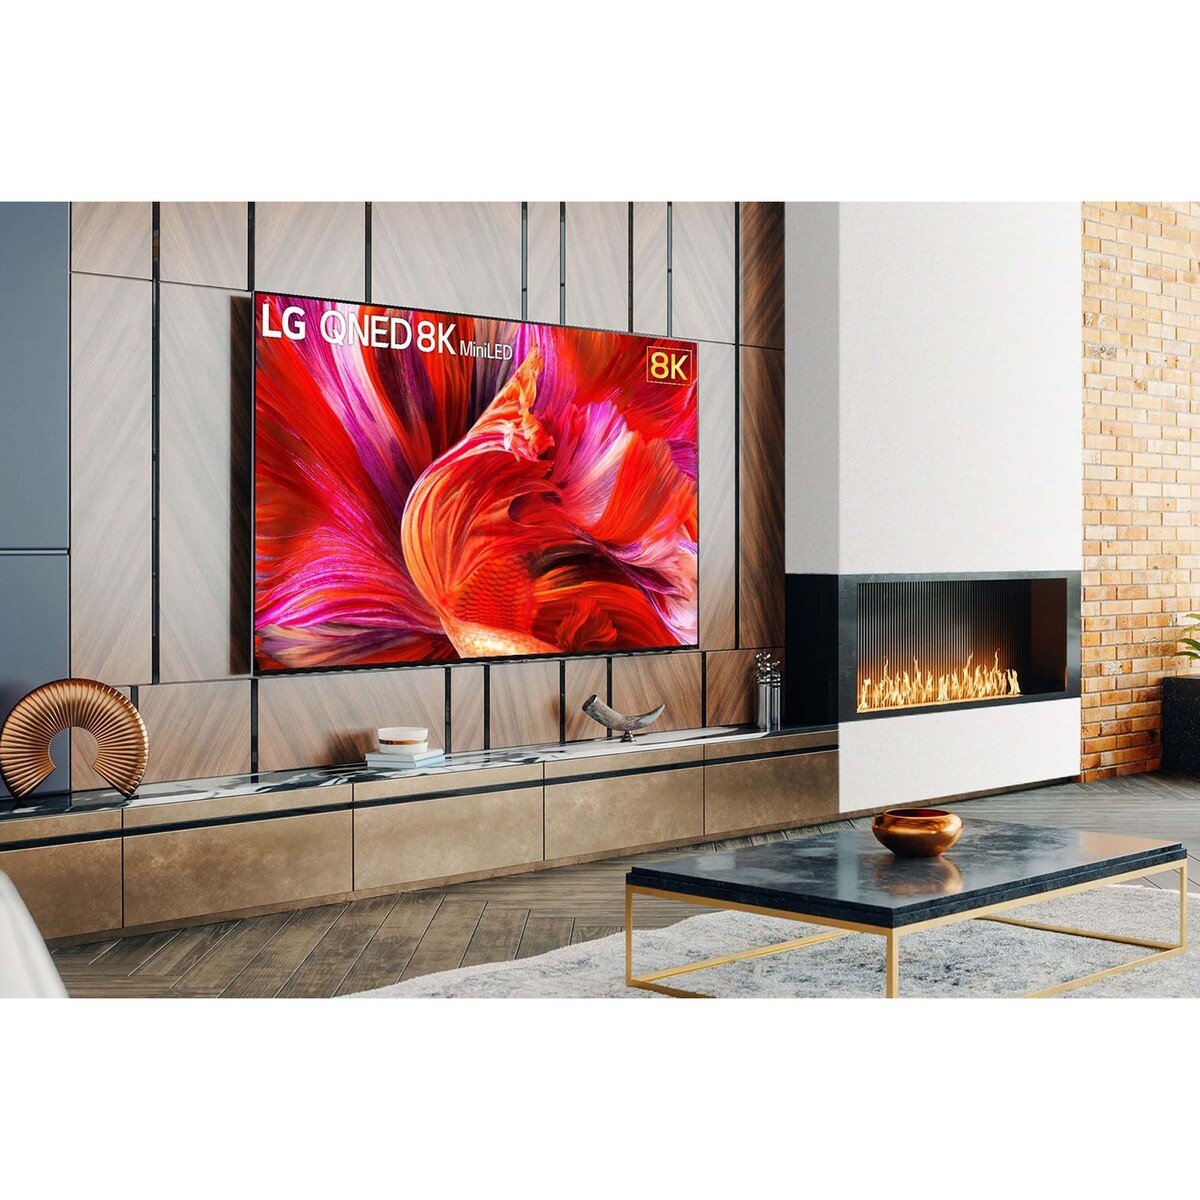 LG QNED TV 75 Inch QNED95 series, New 2021 Cinema Screen Design 8K Cinema HDR WebOS Smart ThinQ AI Mini LED